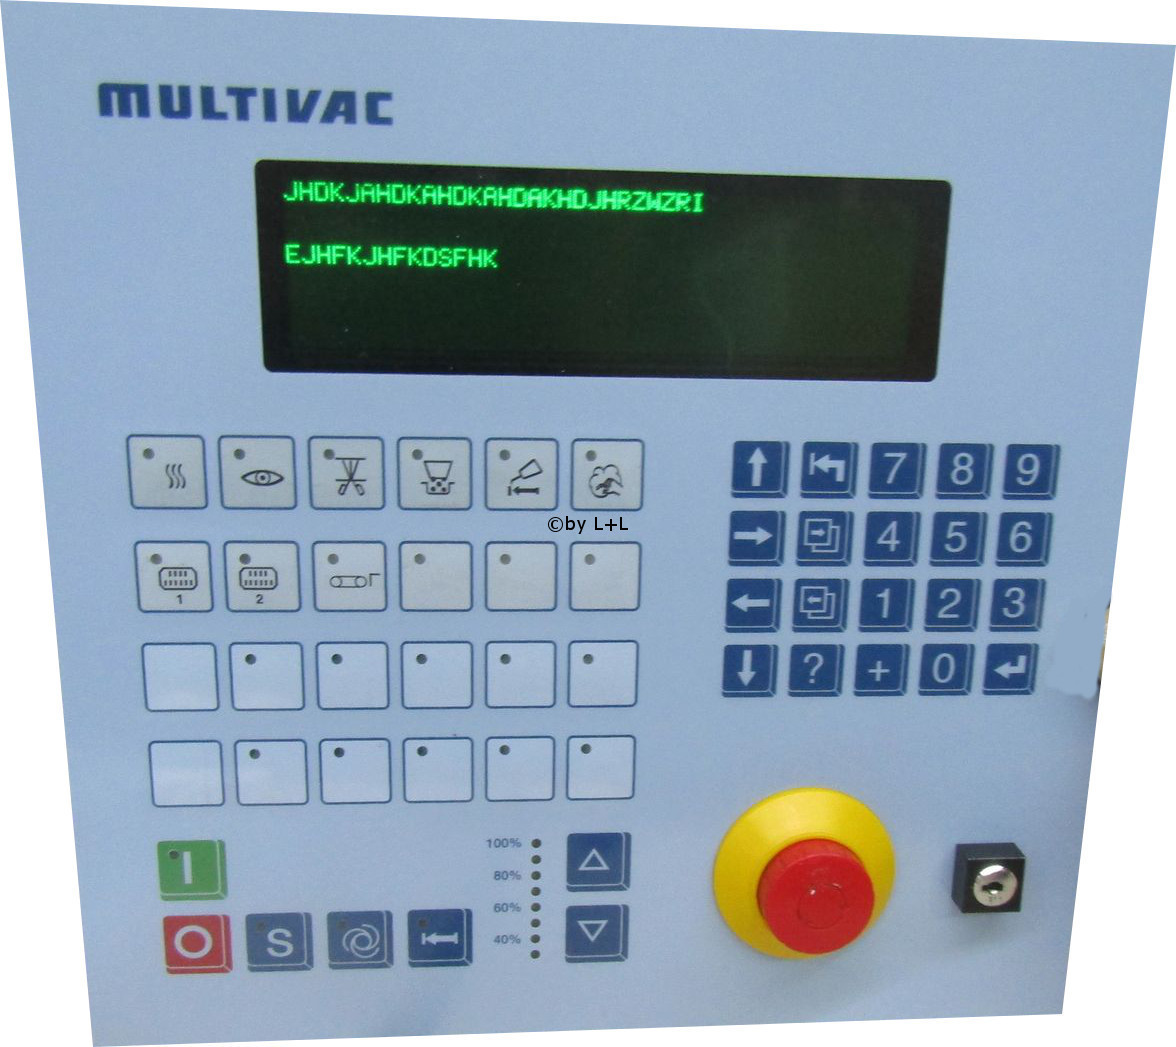 Reparatur Multivac MC92 Typ 80995.010 E-TT441064 und E-TT440063